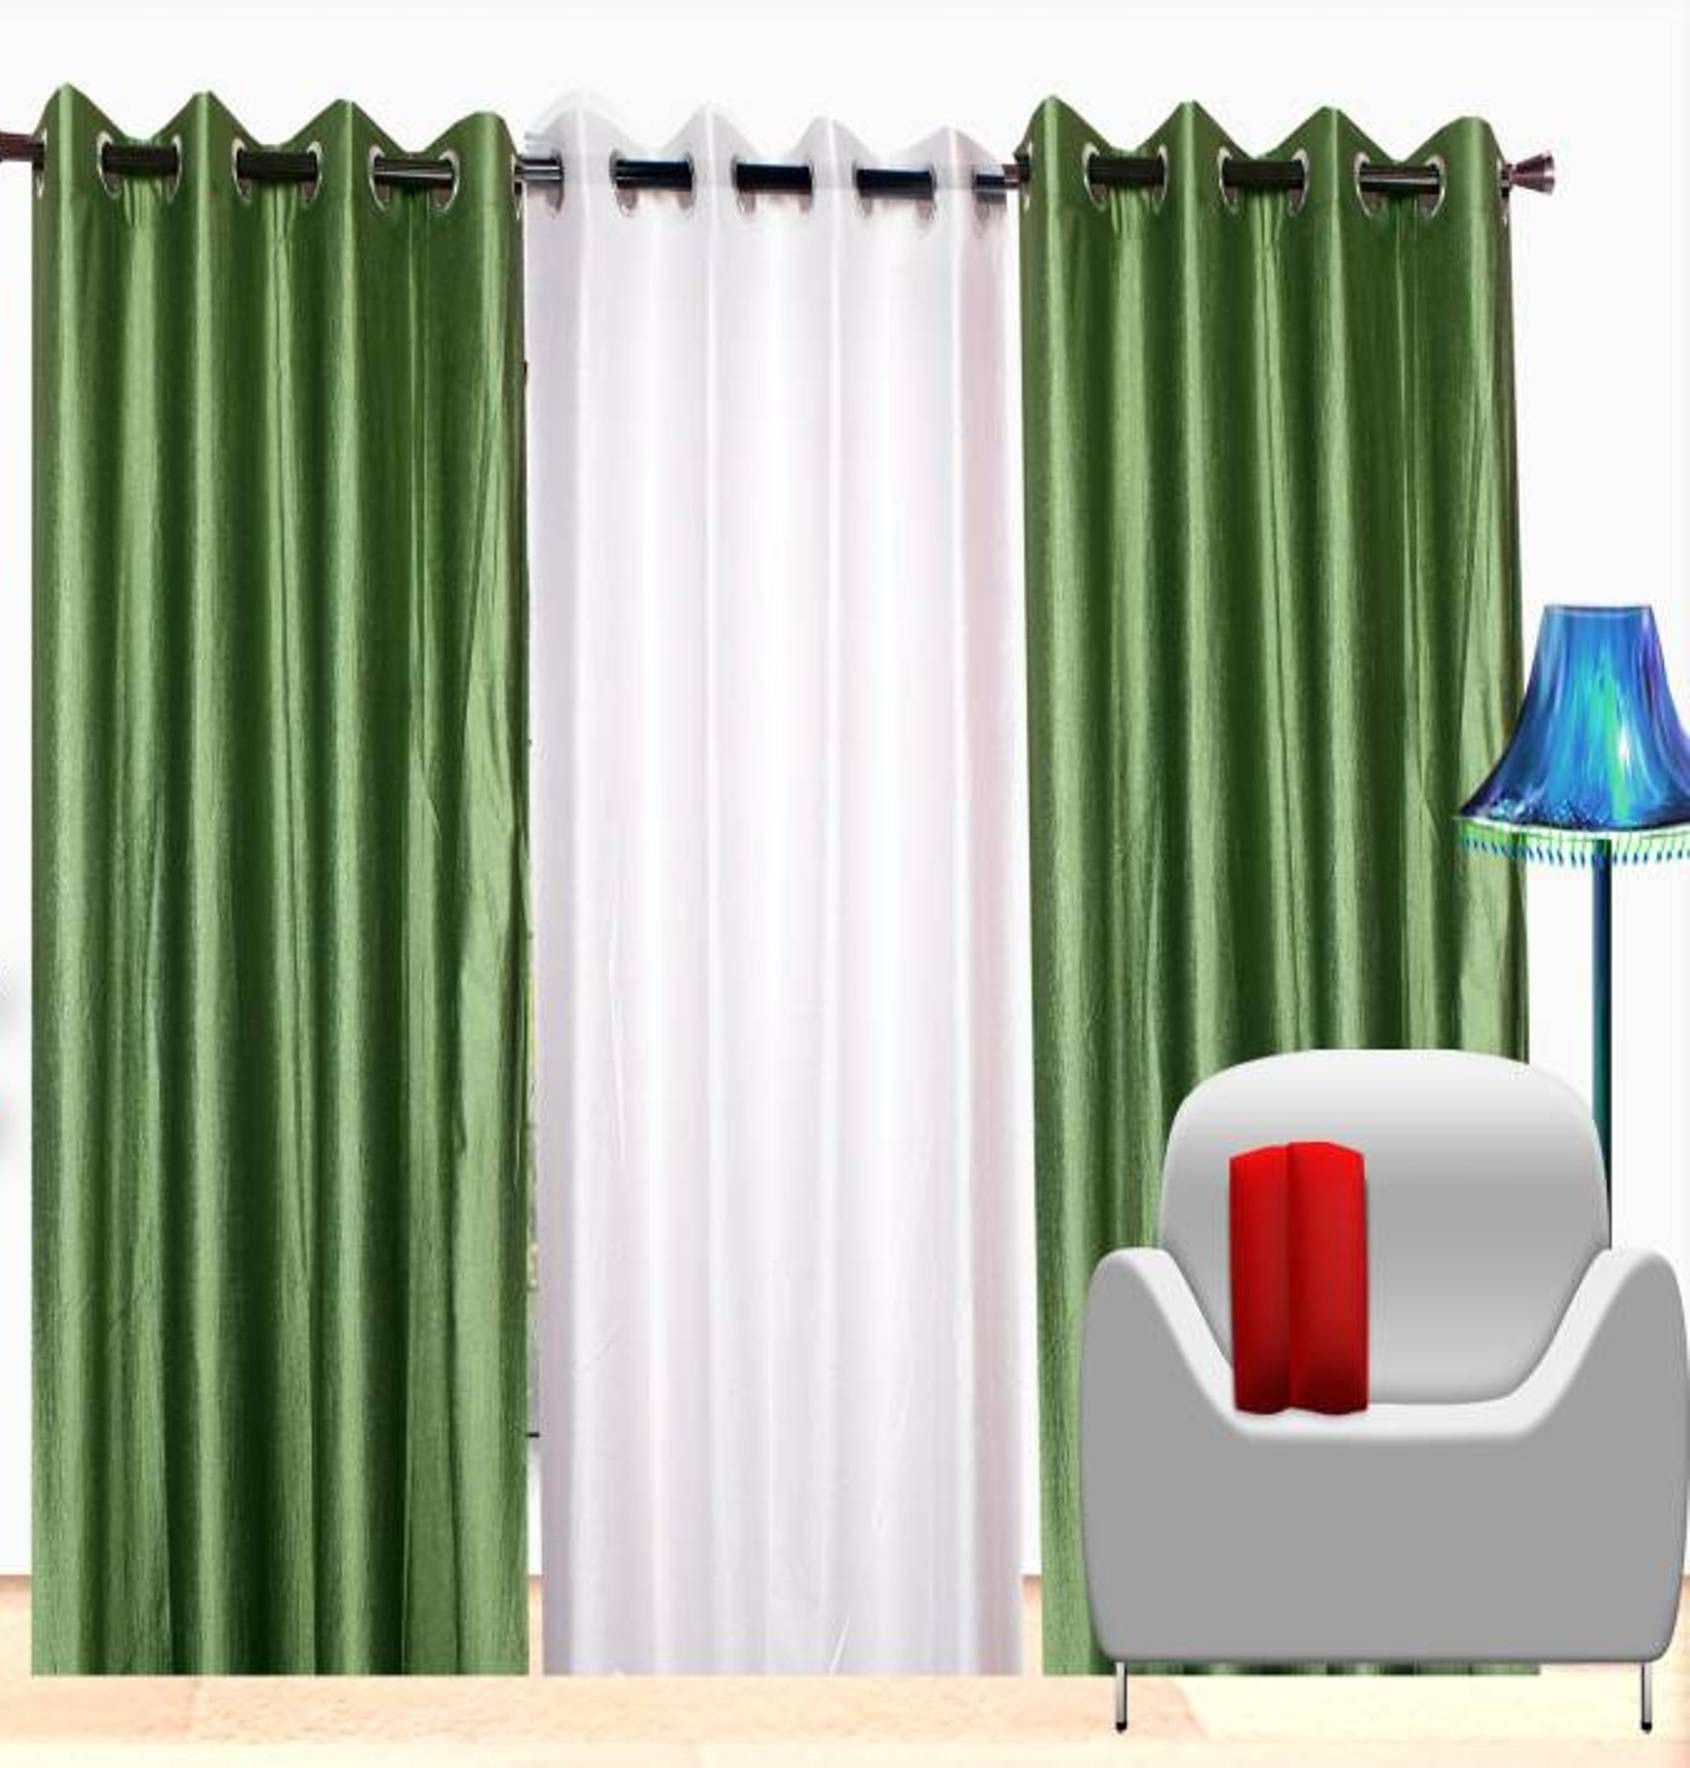     			BELLA TRUE Solid SemiTransparent Eyelet Curtain 9 ft ( Pack of 3 )  Multicolor